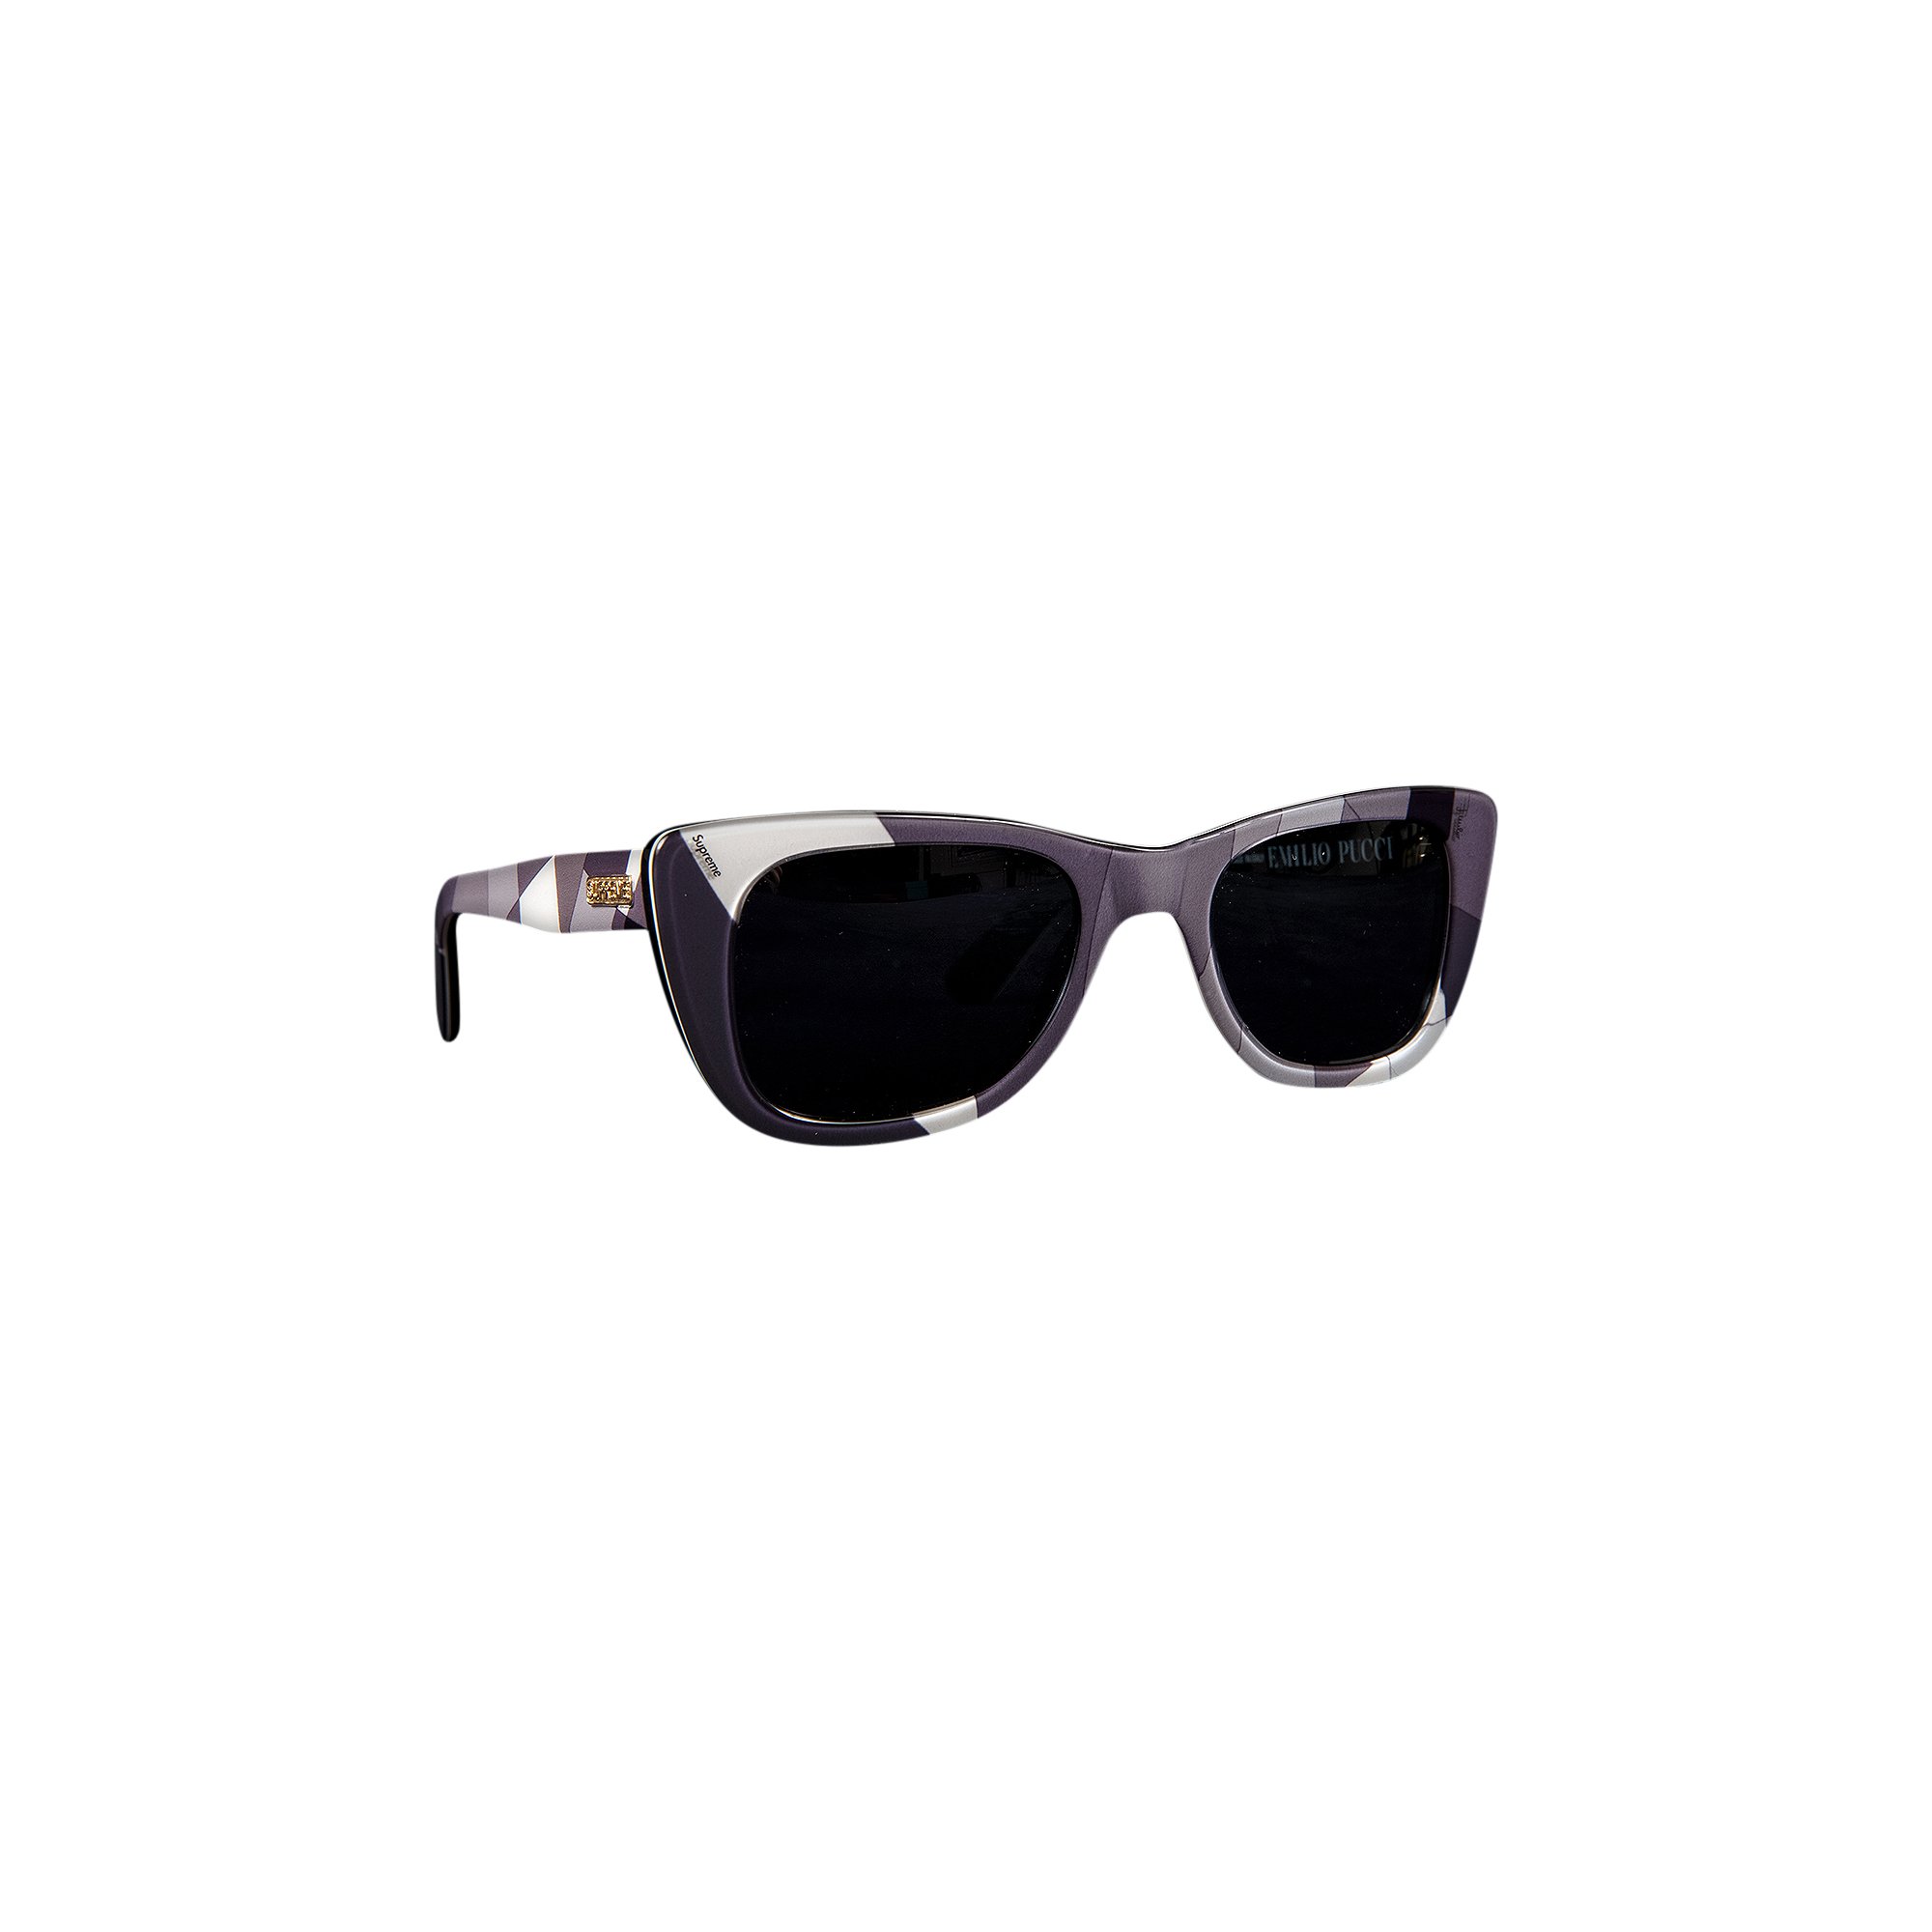 Supreme x Emilio Pucci Cat Sunglasses 'Black' | GOAT